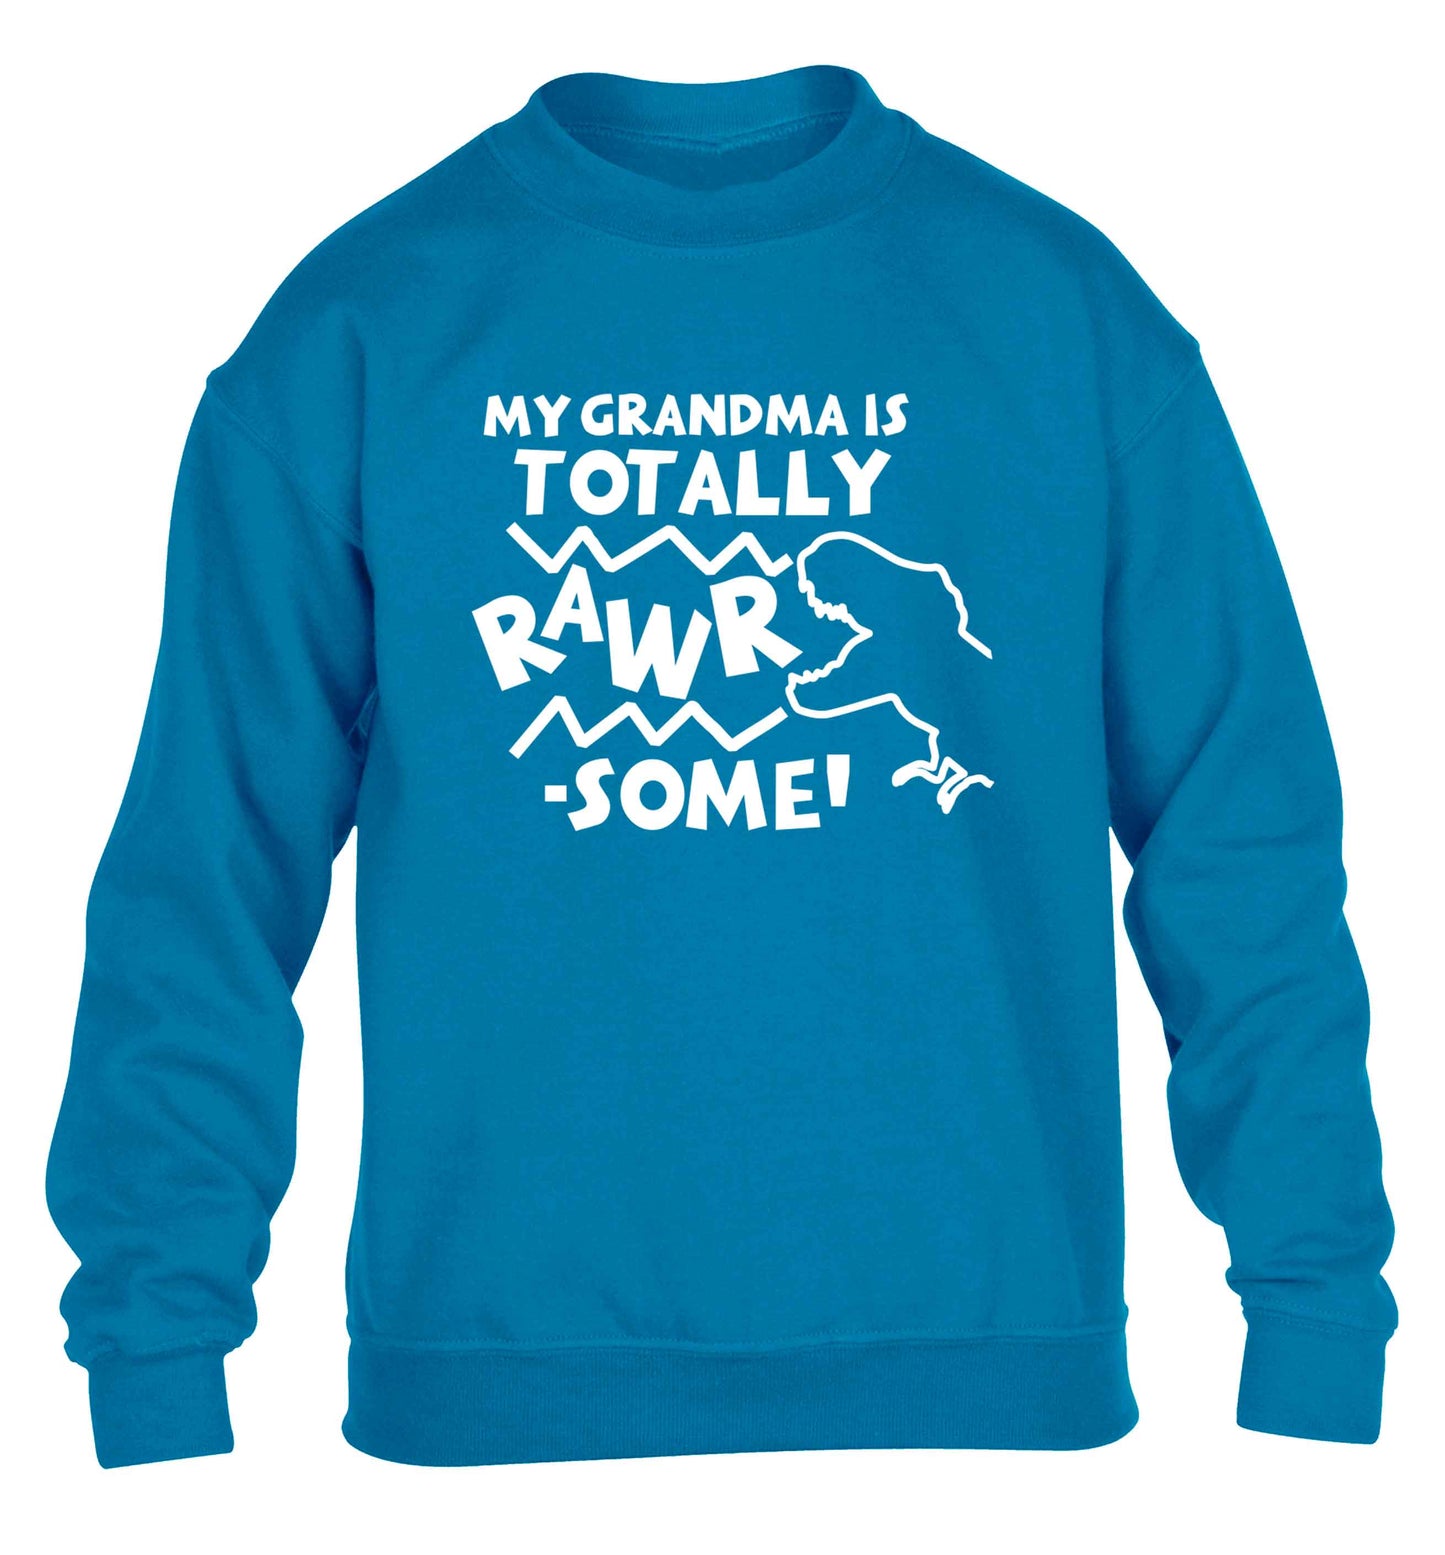 My grandma is totally rawrsome children's blue sweater 12-13 Years